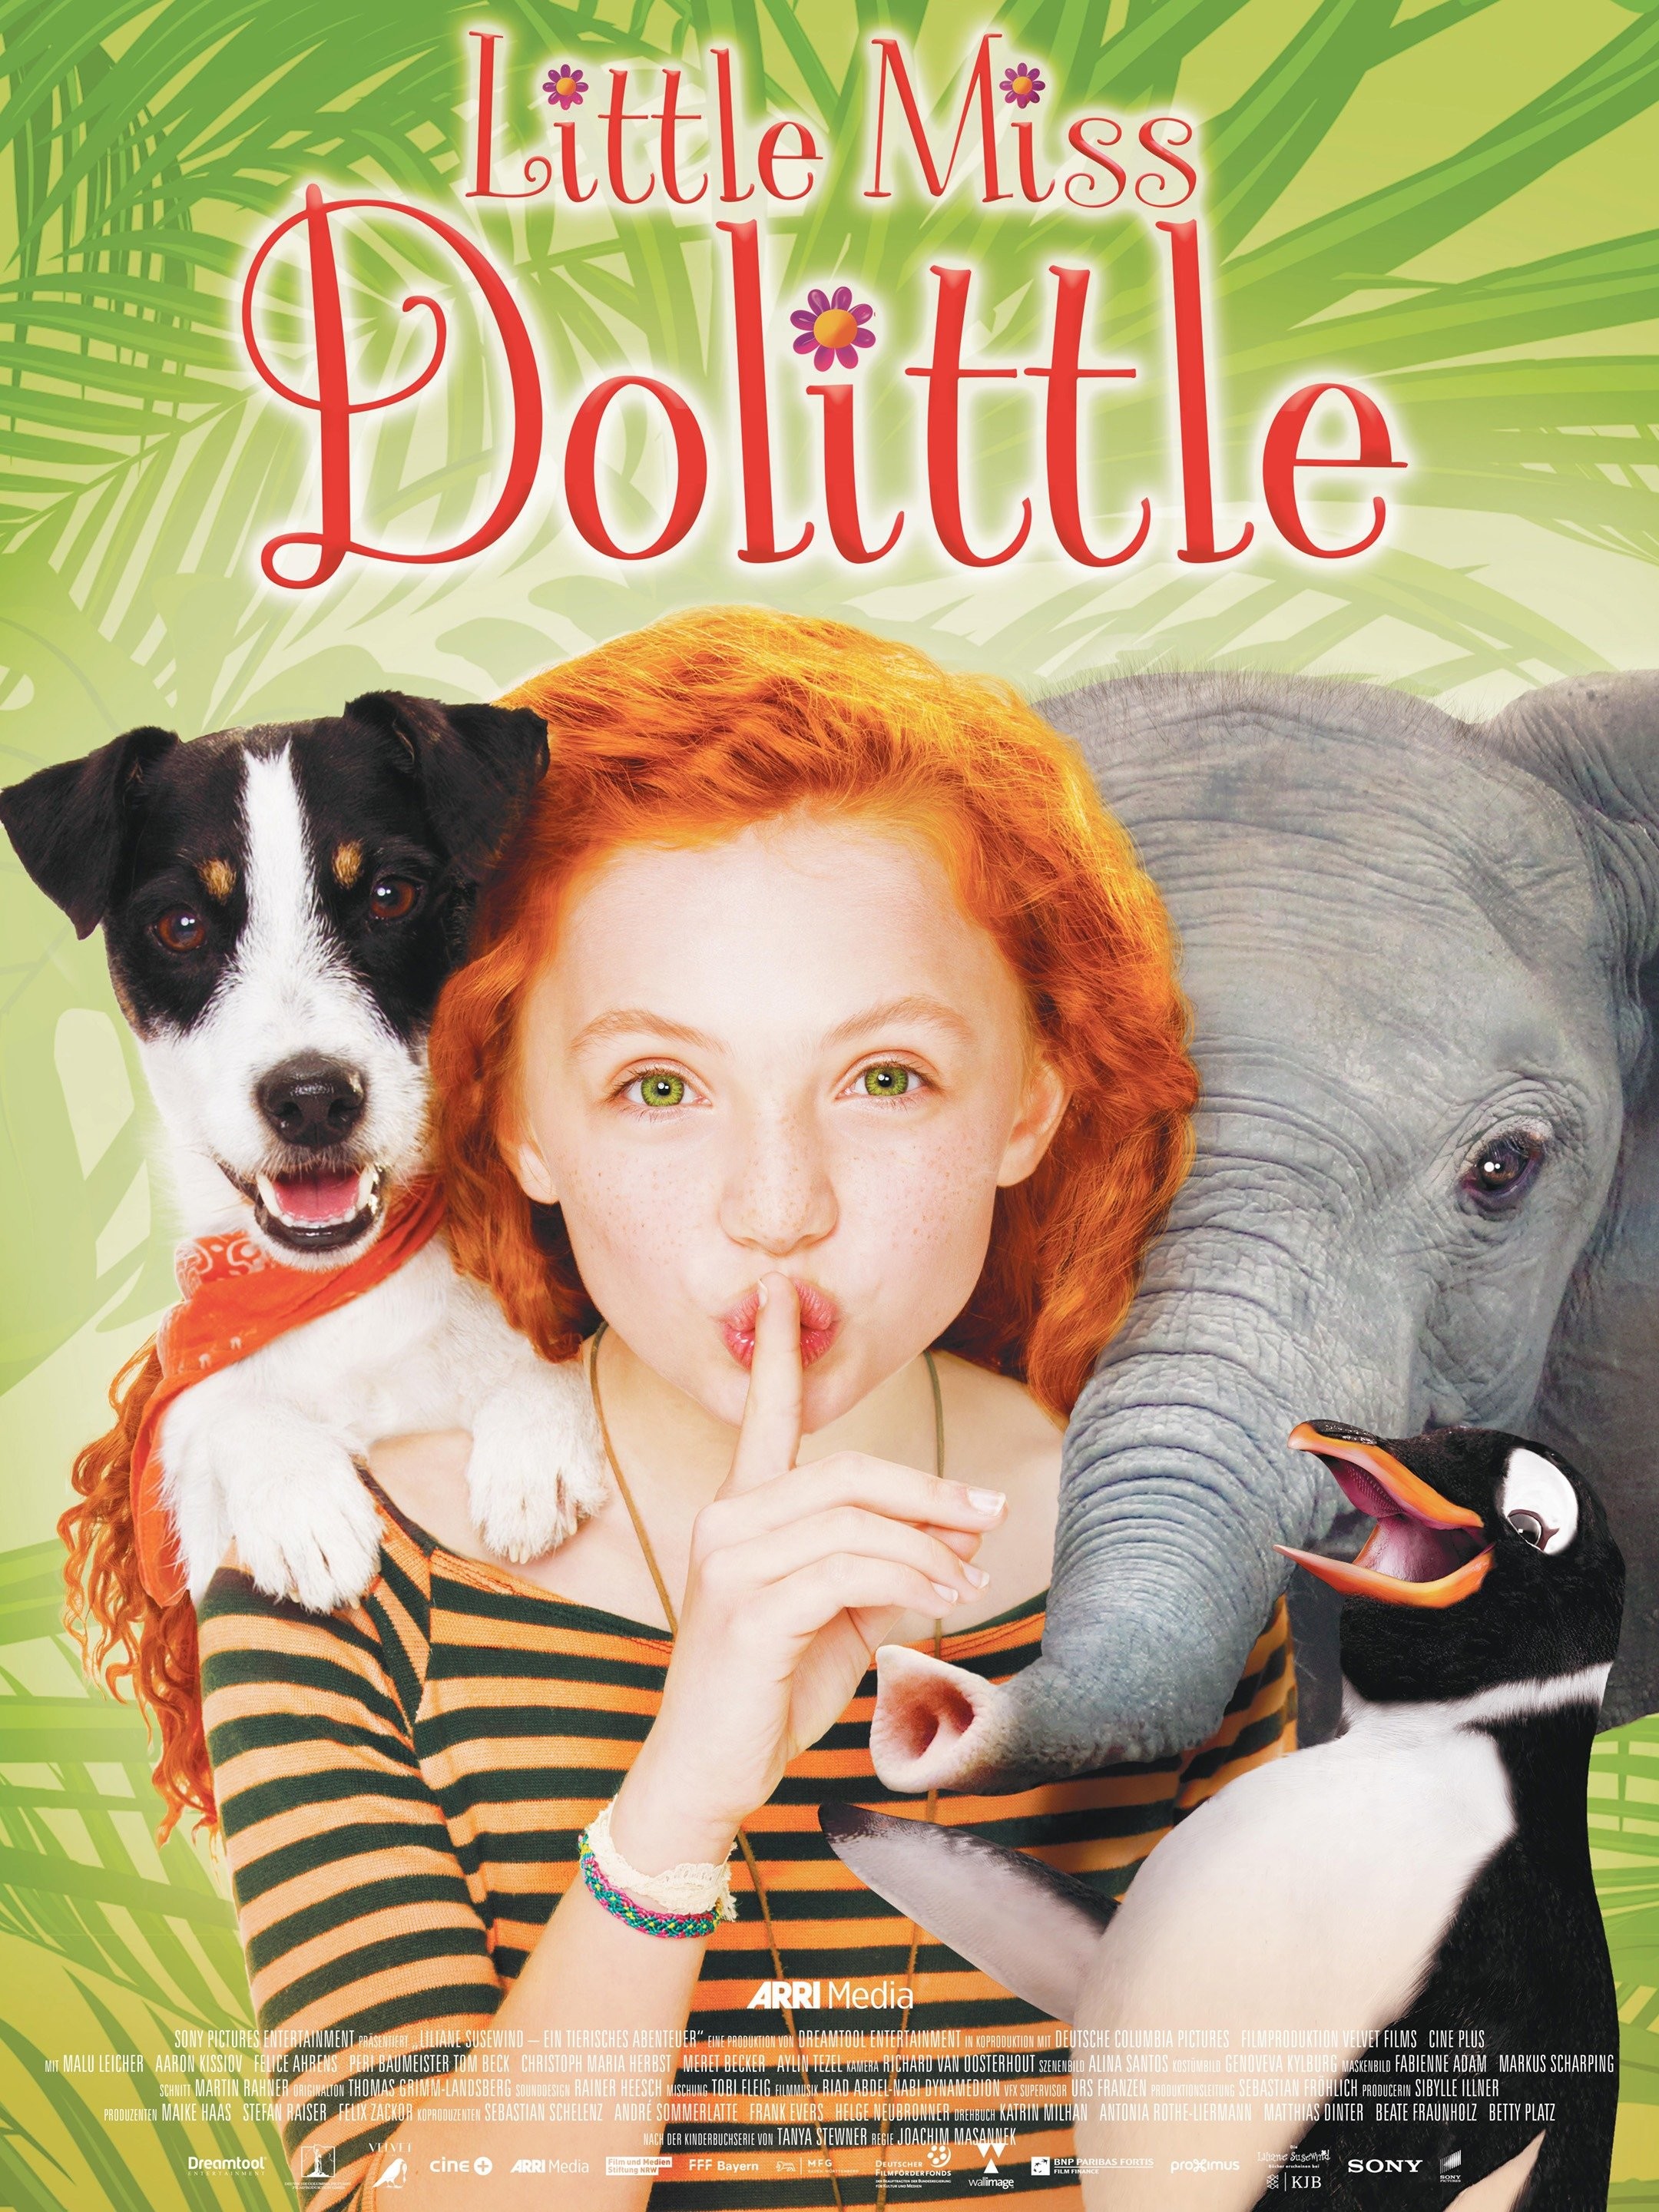 Dolittle | Trailer | Own it on Digital, Blu-ray & DVD - YouTube